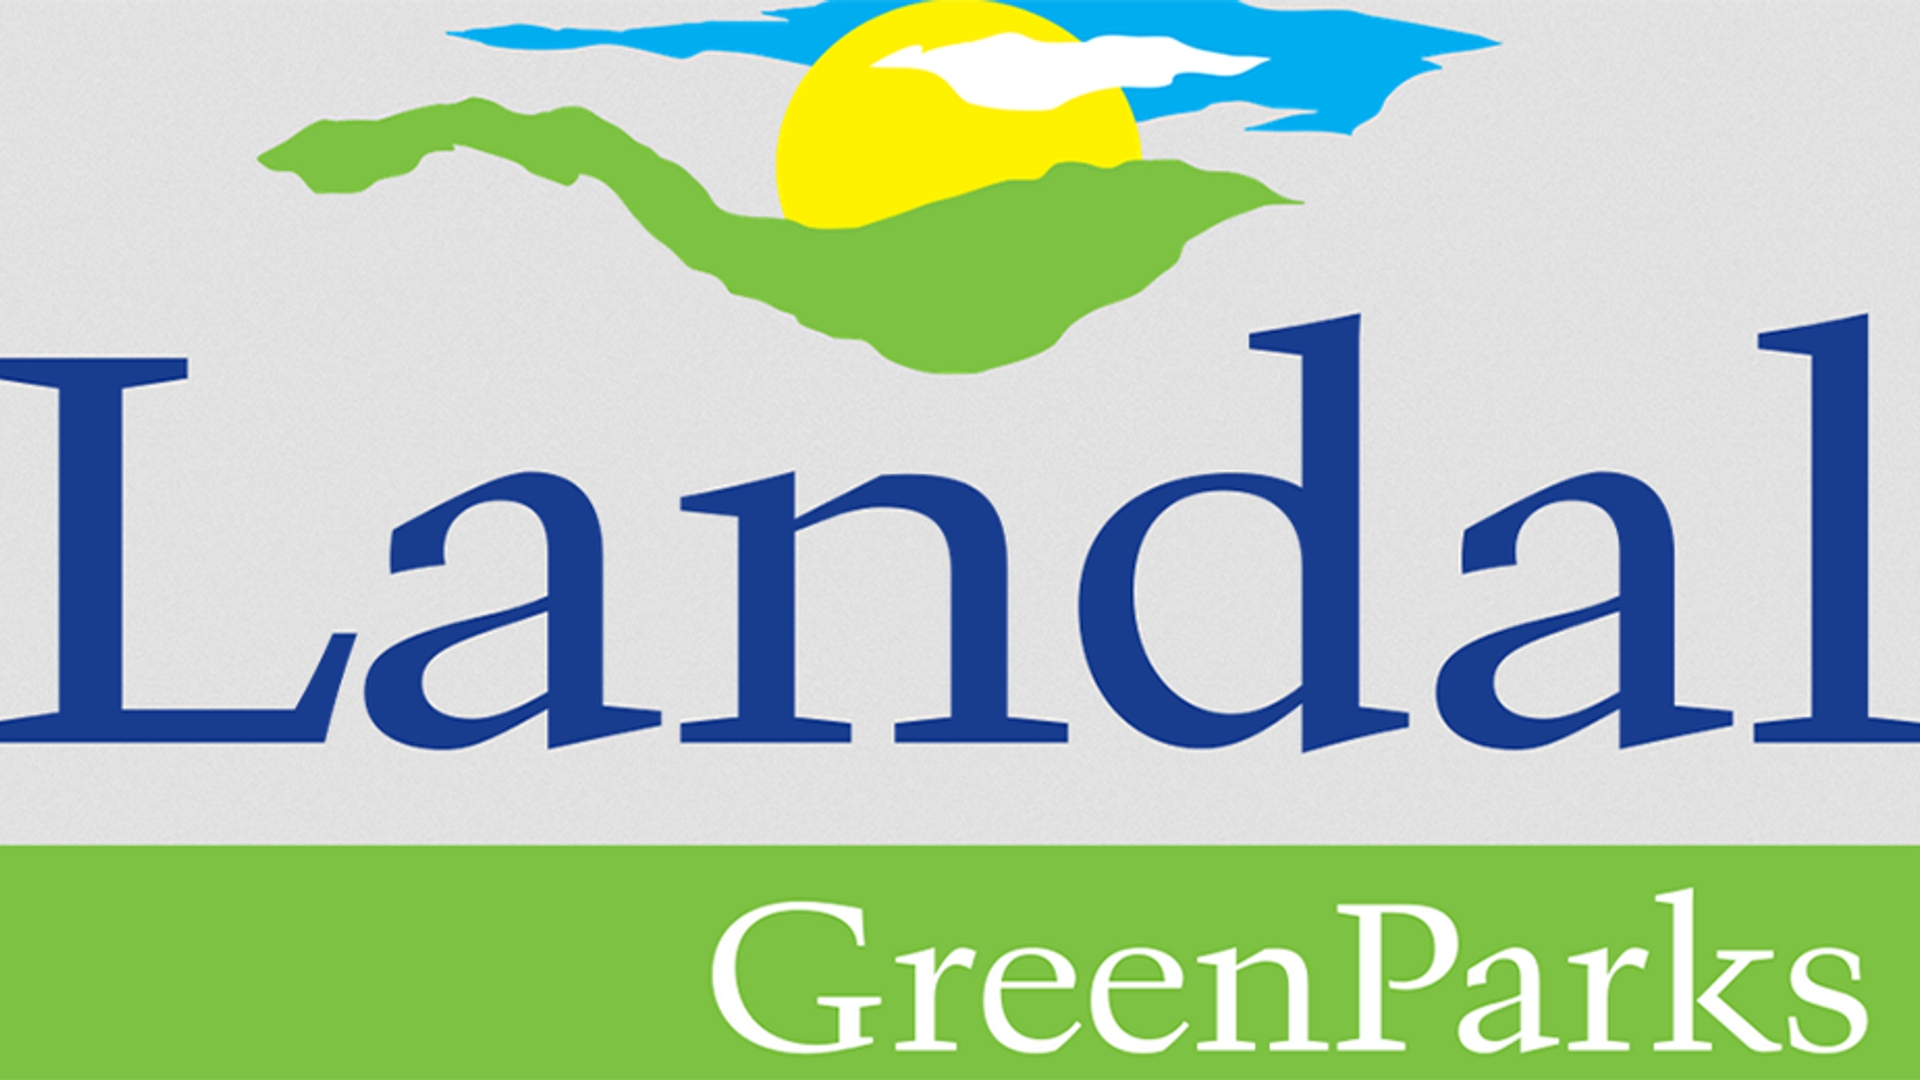 Landal Greenparks logo 930